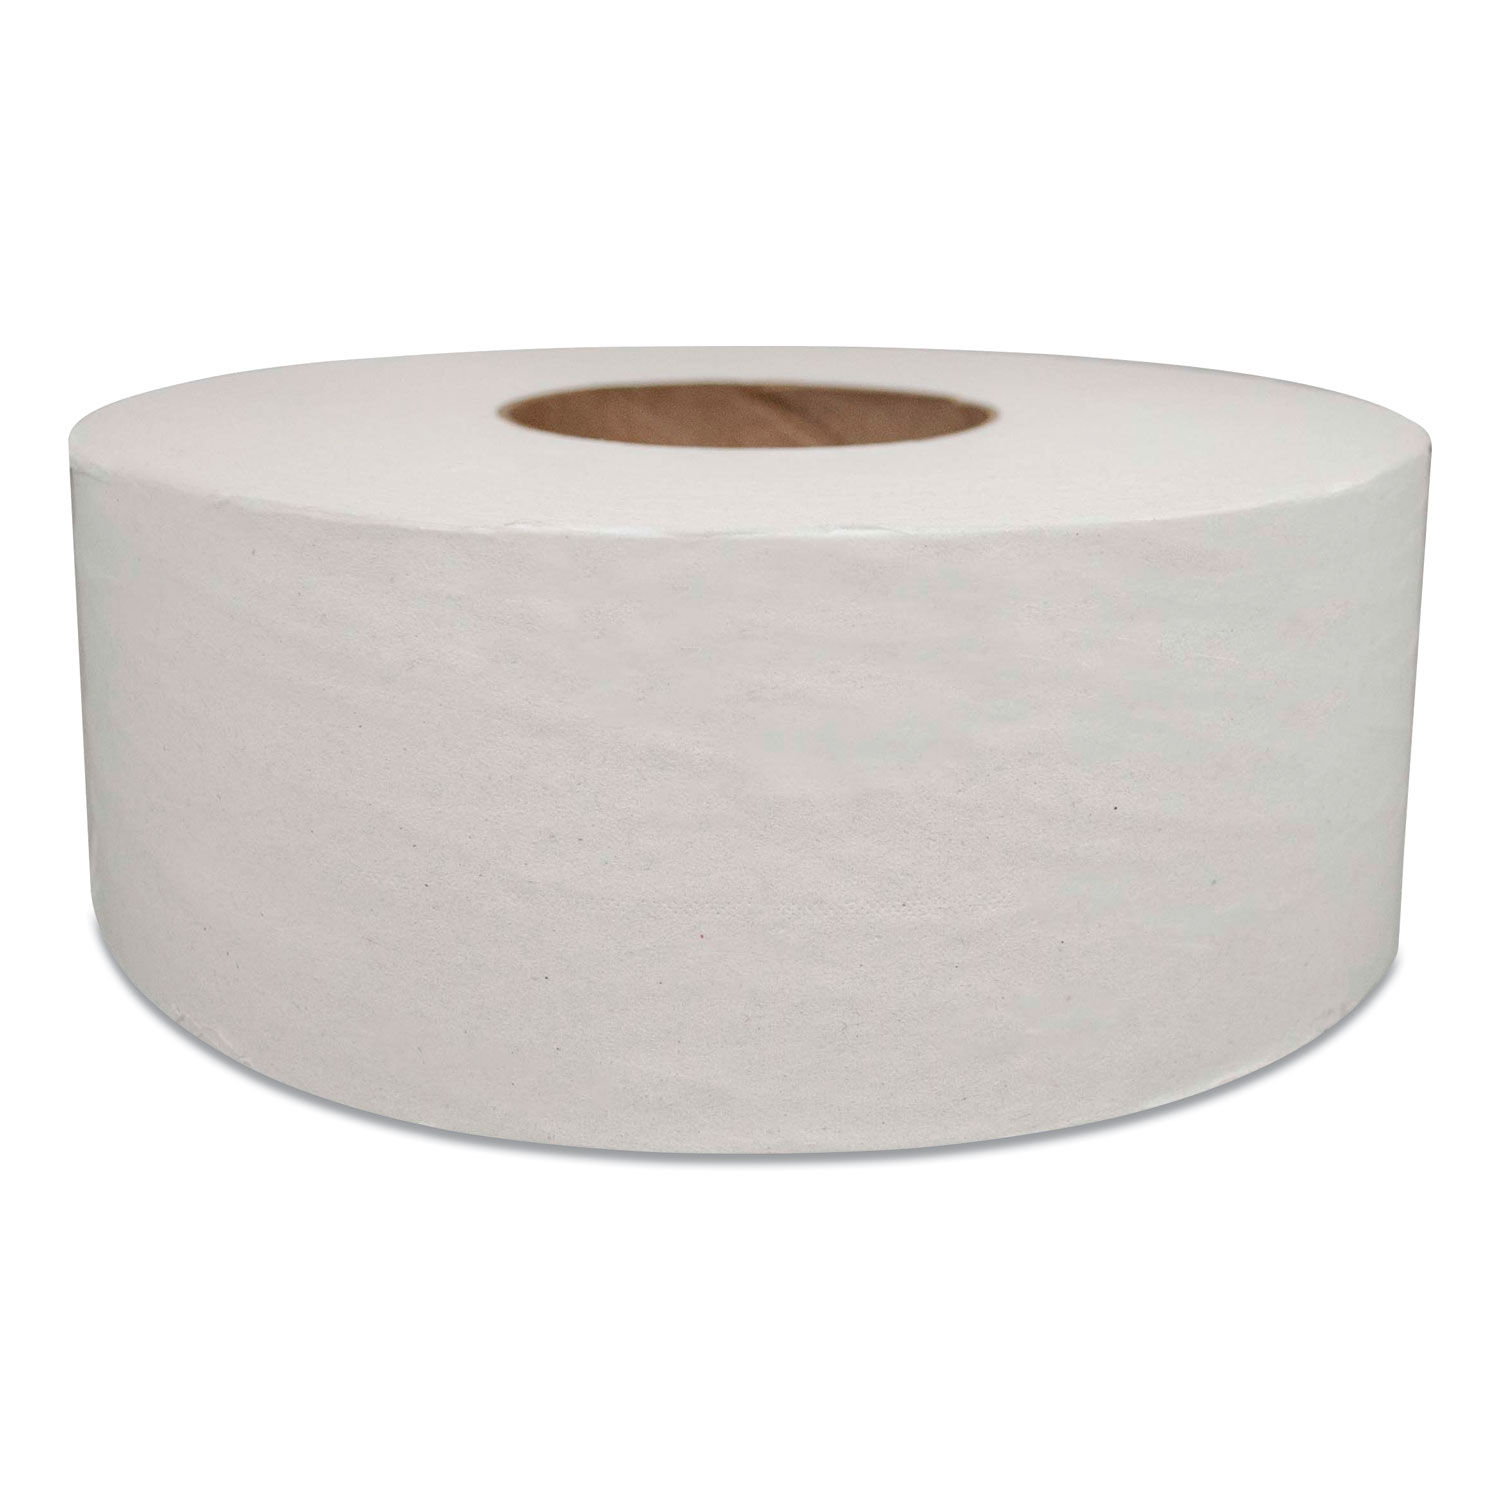  Morcon Tissue M99 Jumbo Bath Tissue, Septic Safe, 2-Ply, White, 1000 ft, 12/Carton (MORM99) 